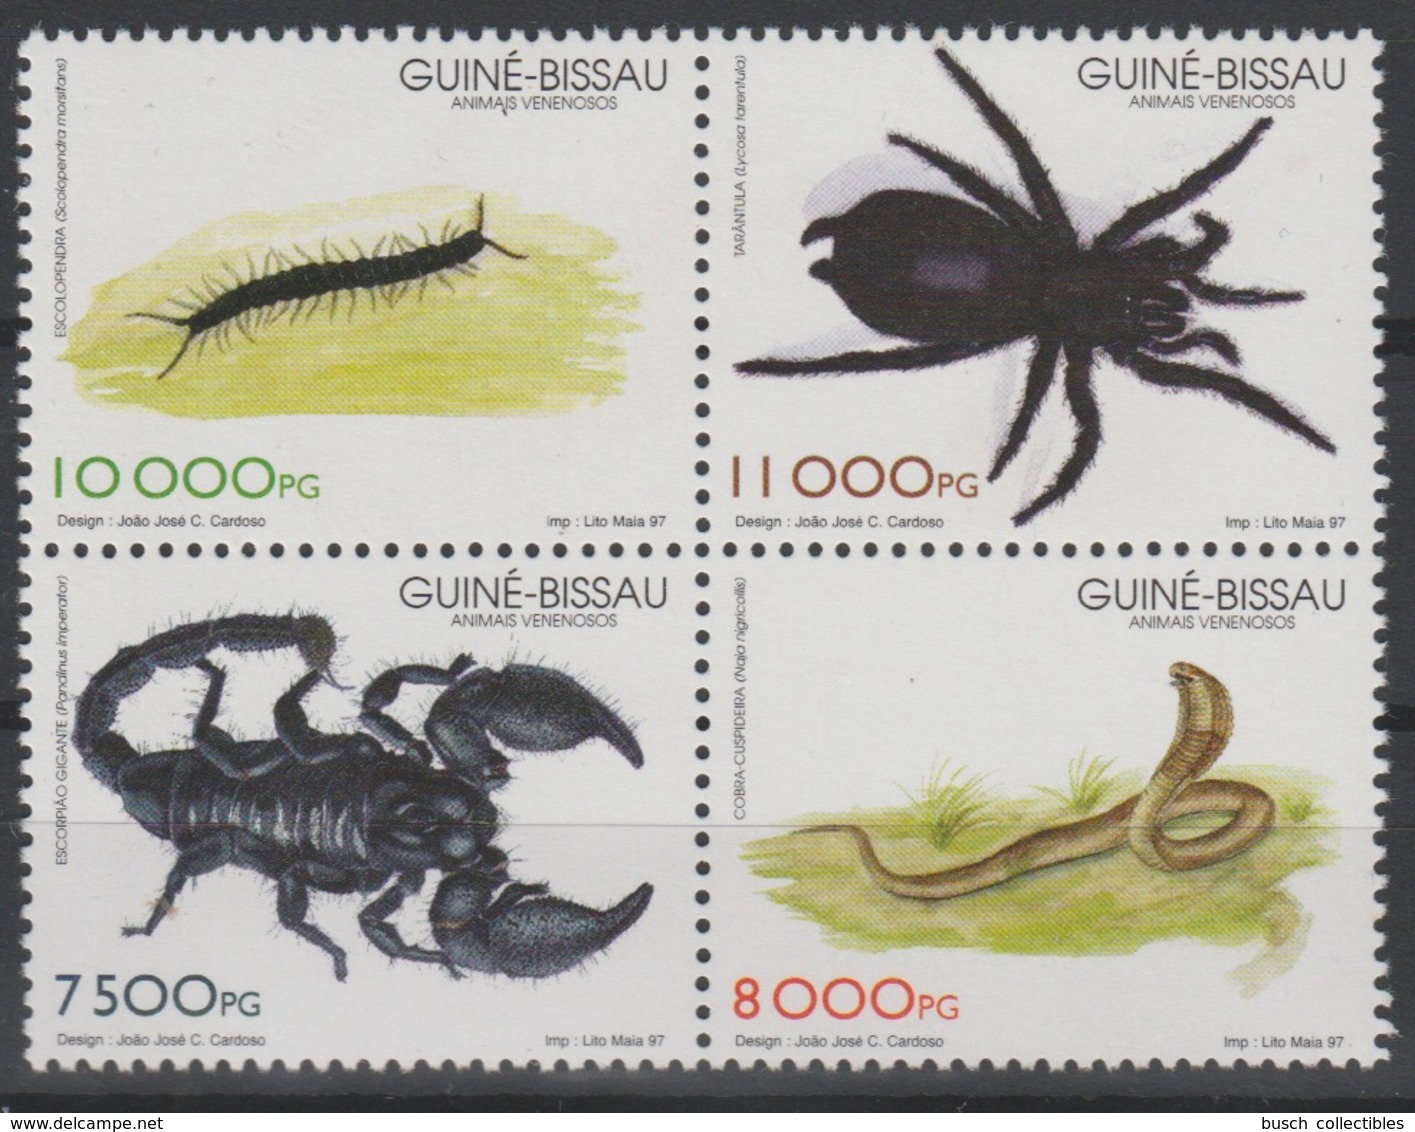 Guiné-Bissau Guinea Guinée Bissau 1997 Mi. 1252 - 1255 Poisonous Animals Fauna Block Of 4 Serpent Snake Scorpion Spider - Serpientes